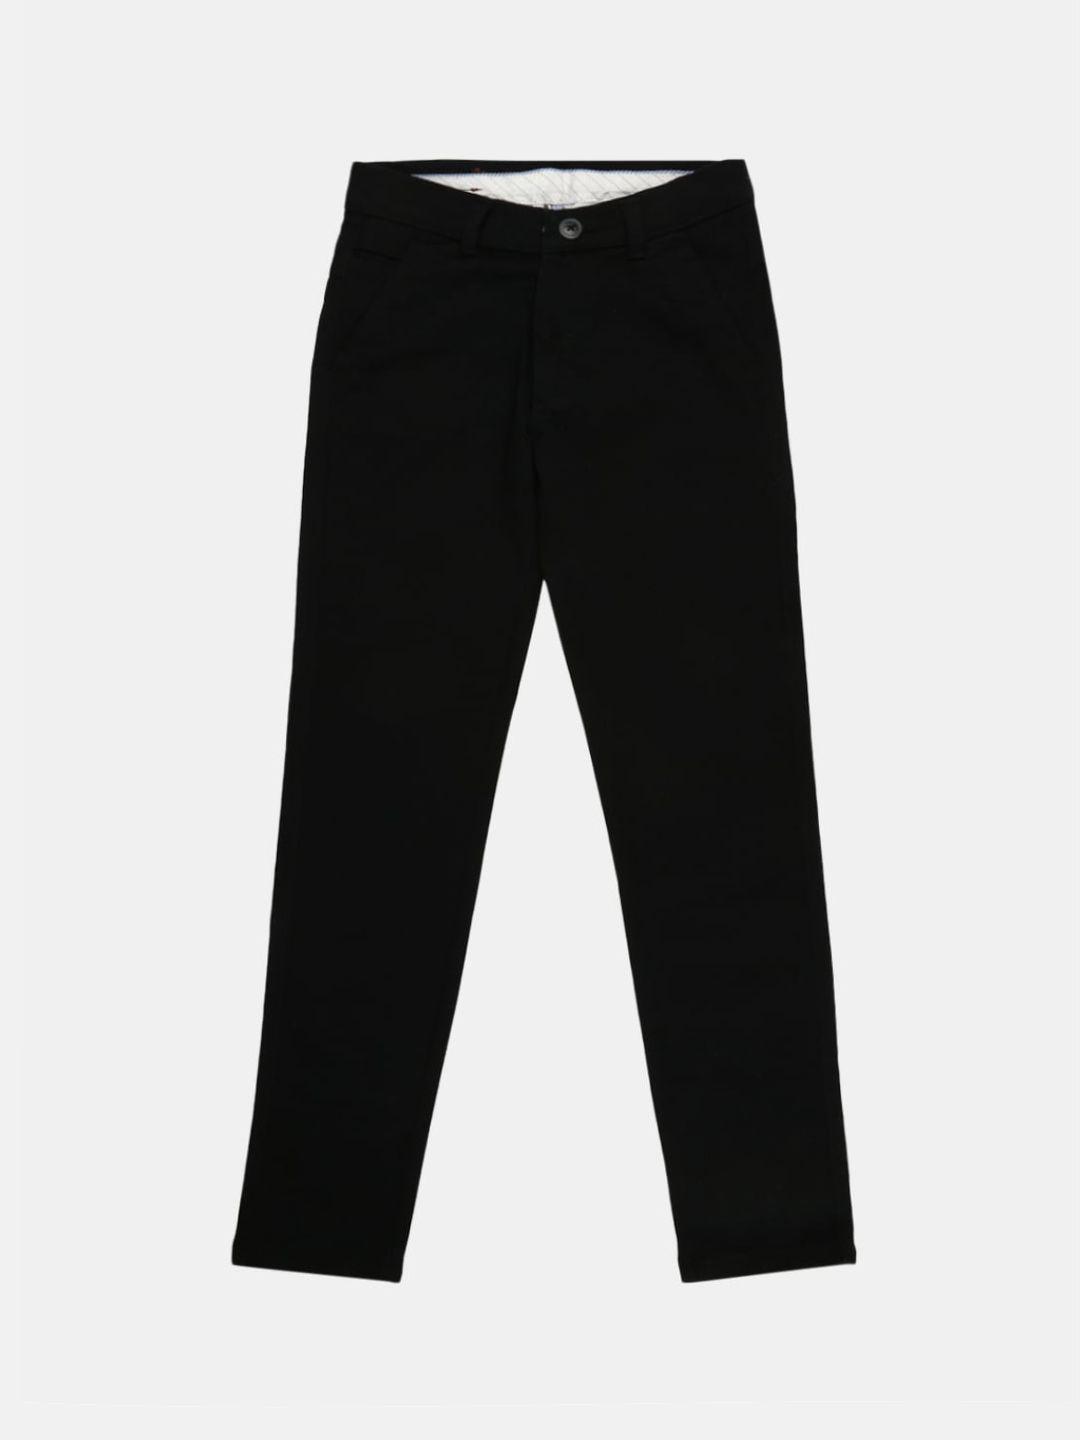 v-mart boys black chinos trousers